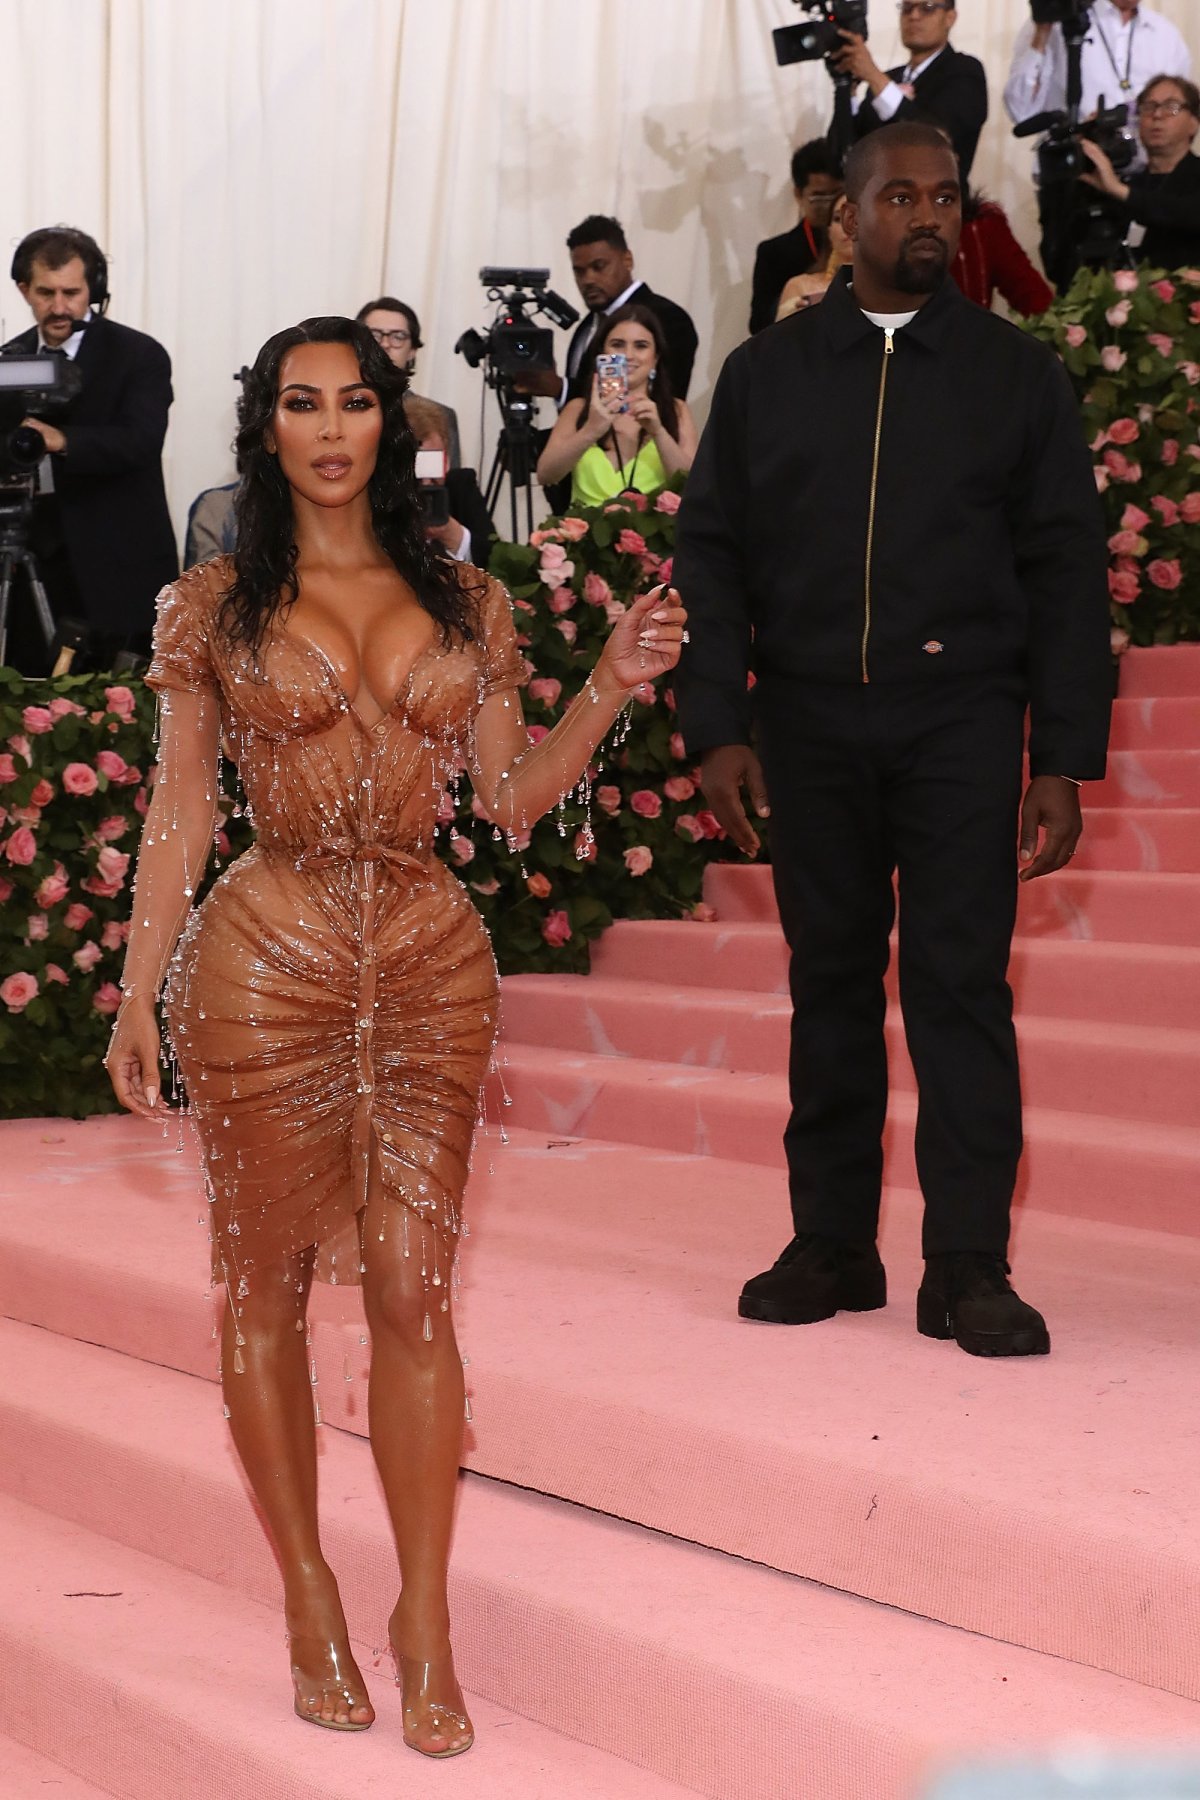 Kanye West says Kim Kardashian's 'sexy' photos hurt his soul - National |  Globalnews.ca